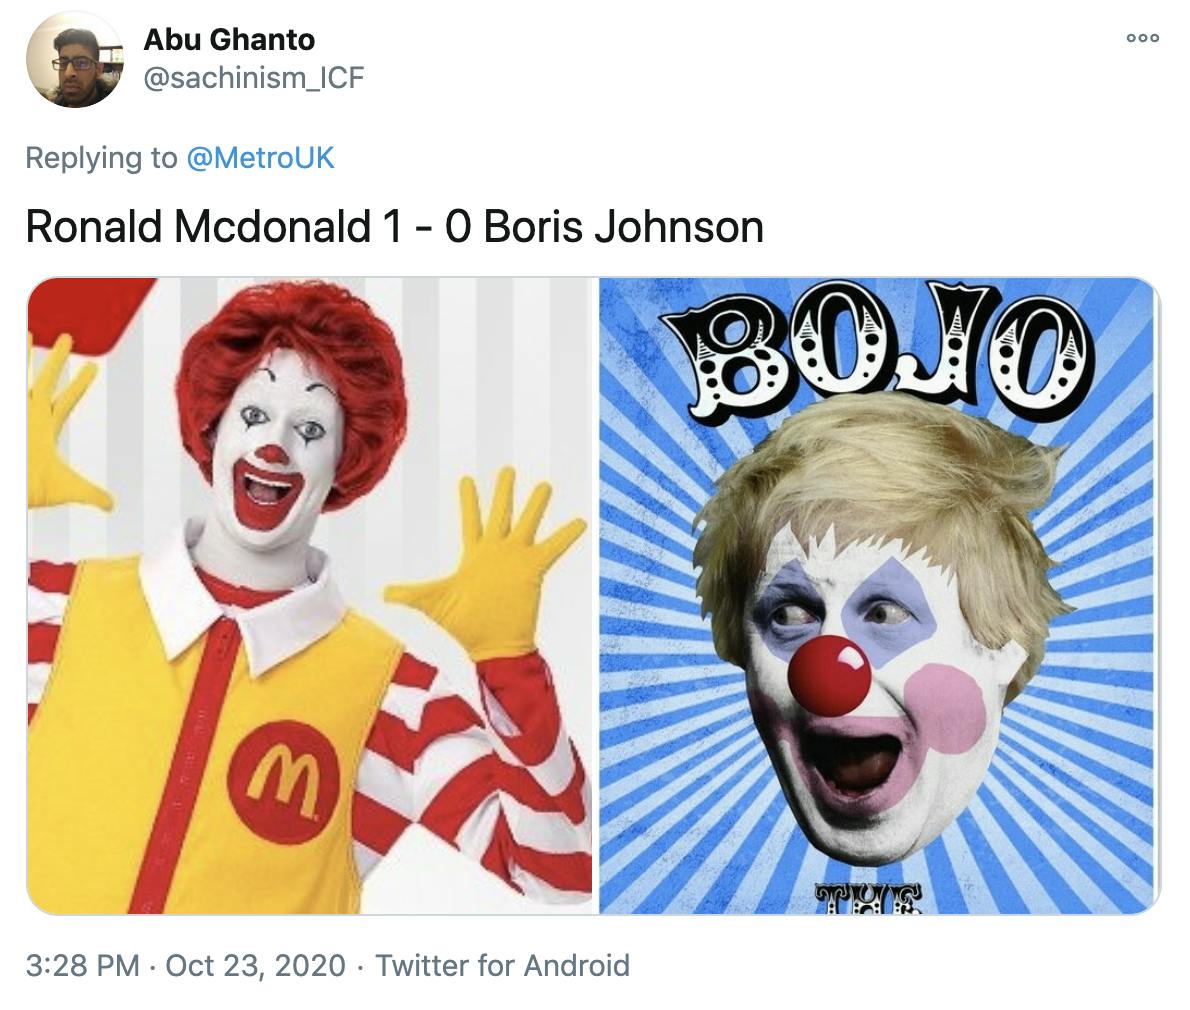 'Ronald Mcdonald 1 - 0 Boris Johnson' picture of Ronald MacDonald next to image of Boris Johnson made up to look like a clown